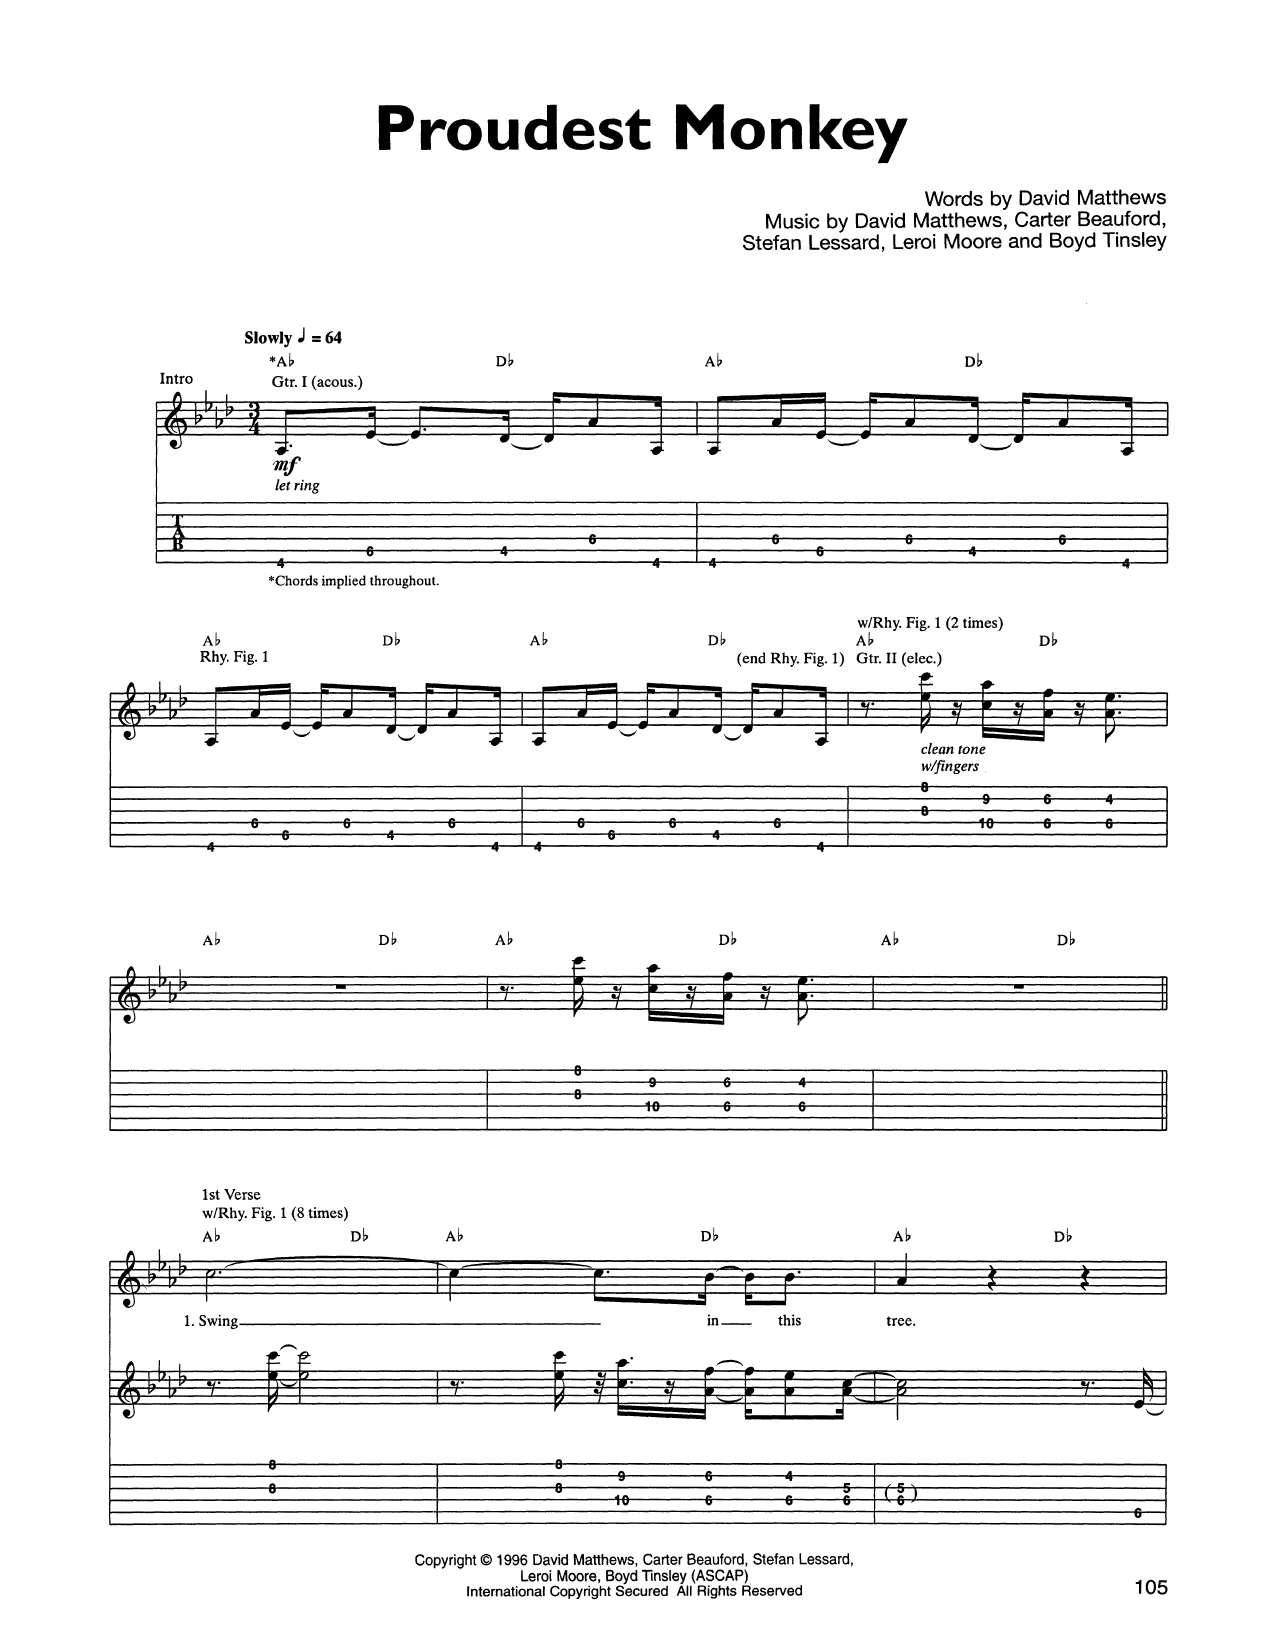 Dave Matthews Band Proudest Monkey Sheet Music Notes & Chords for Guitar Tab - Download or Print PDF